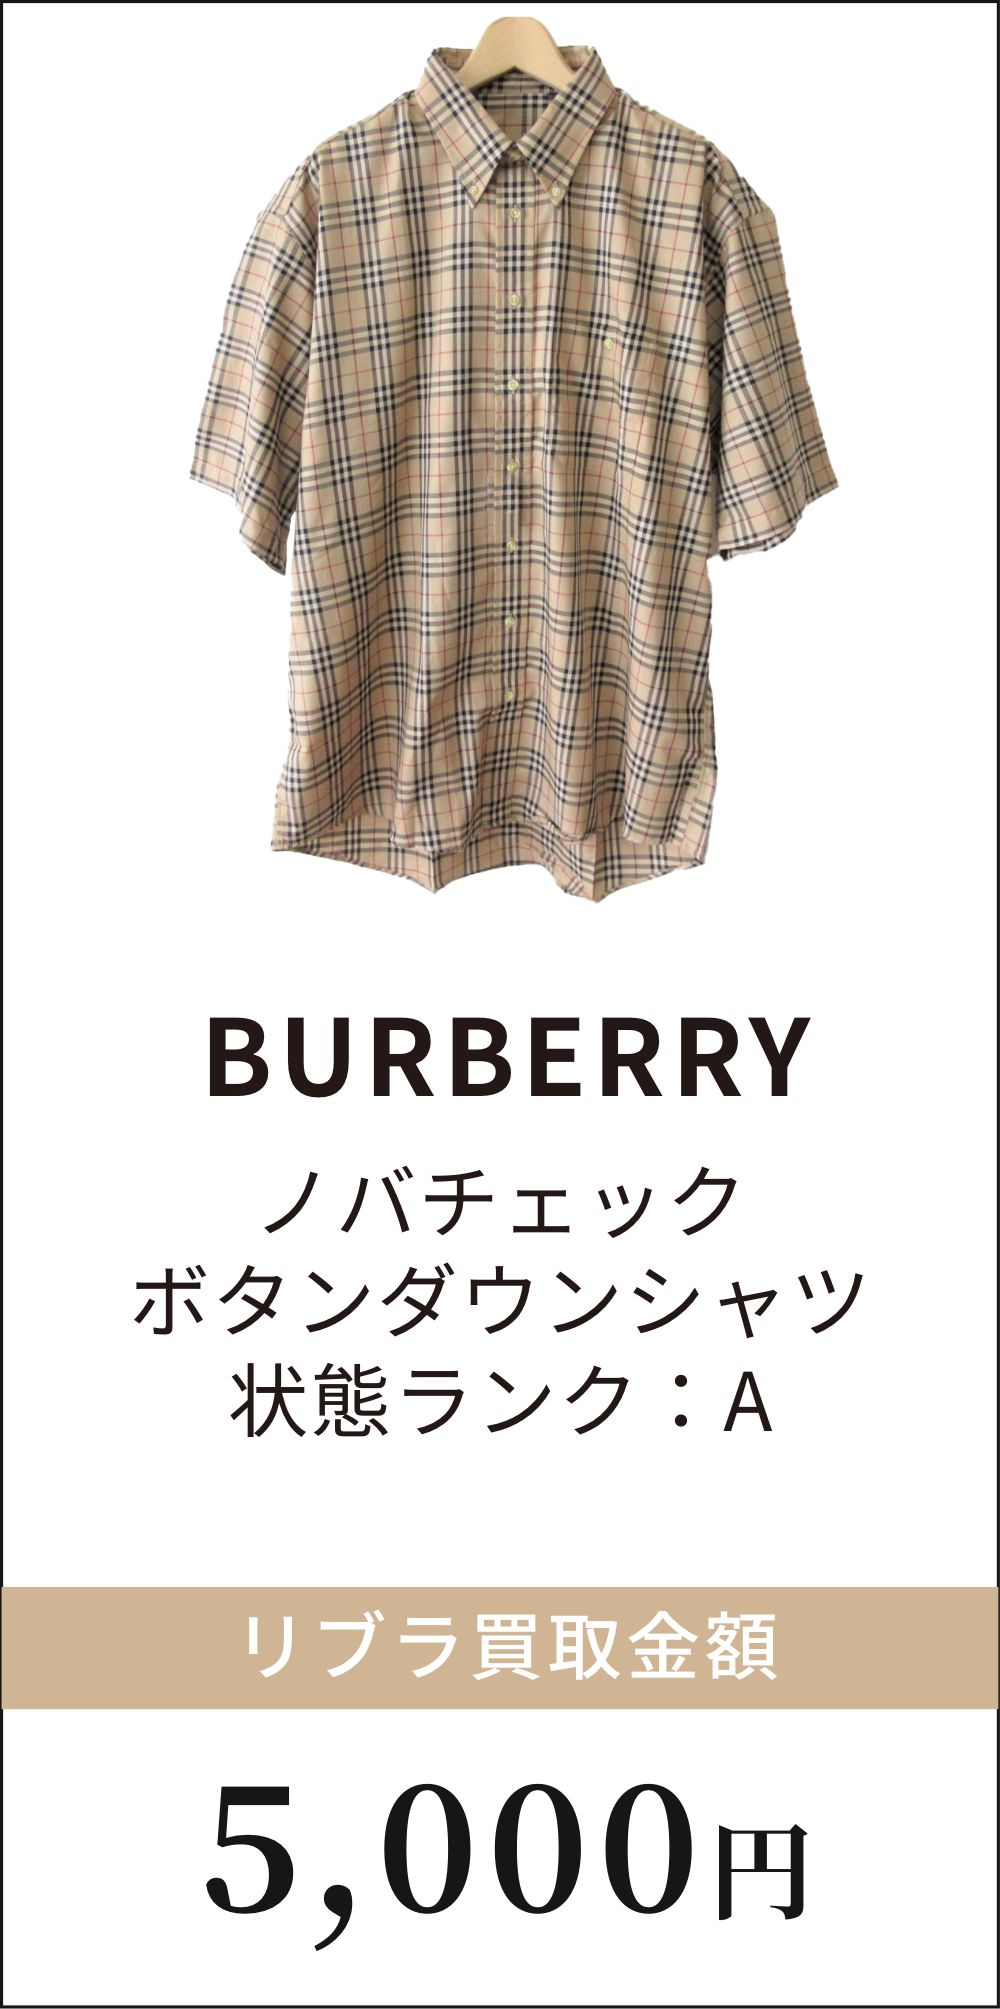 BURBERRY ノバチェックボタンダウンシャツ